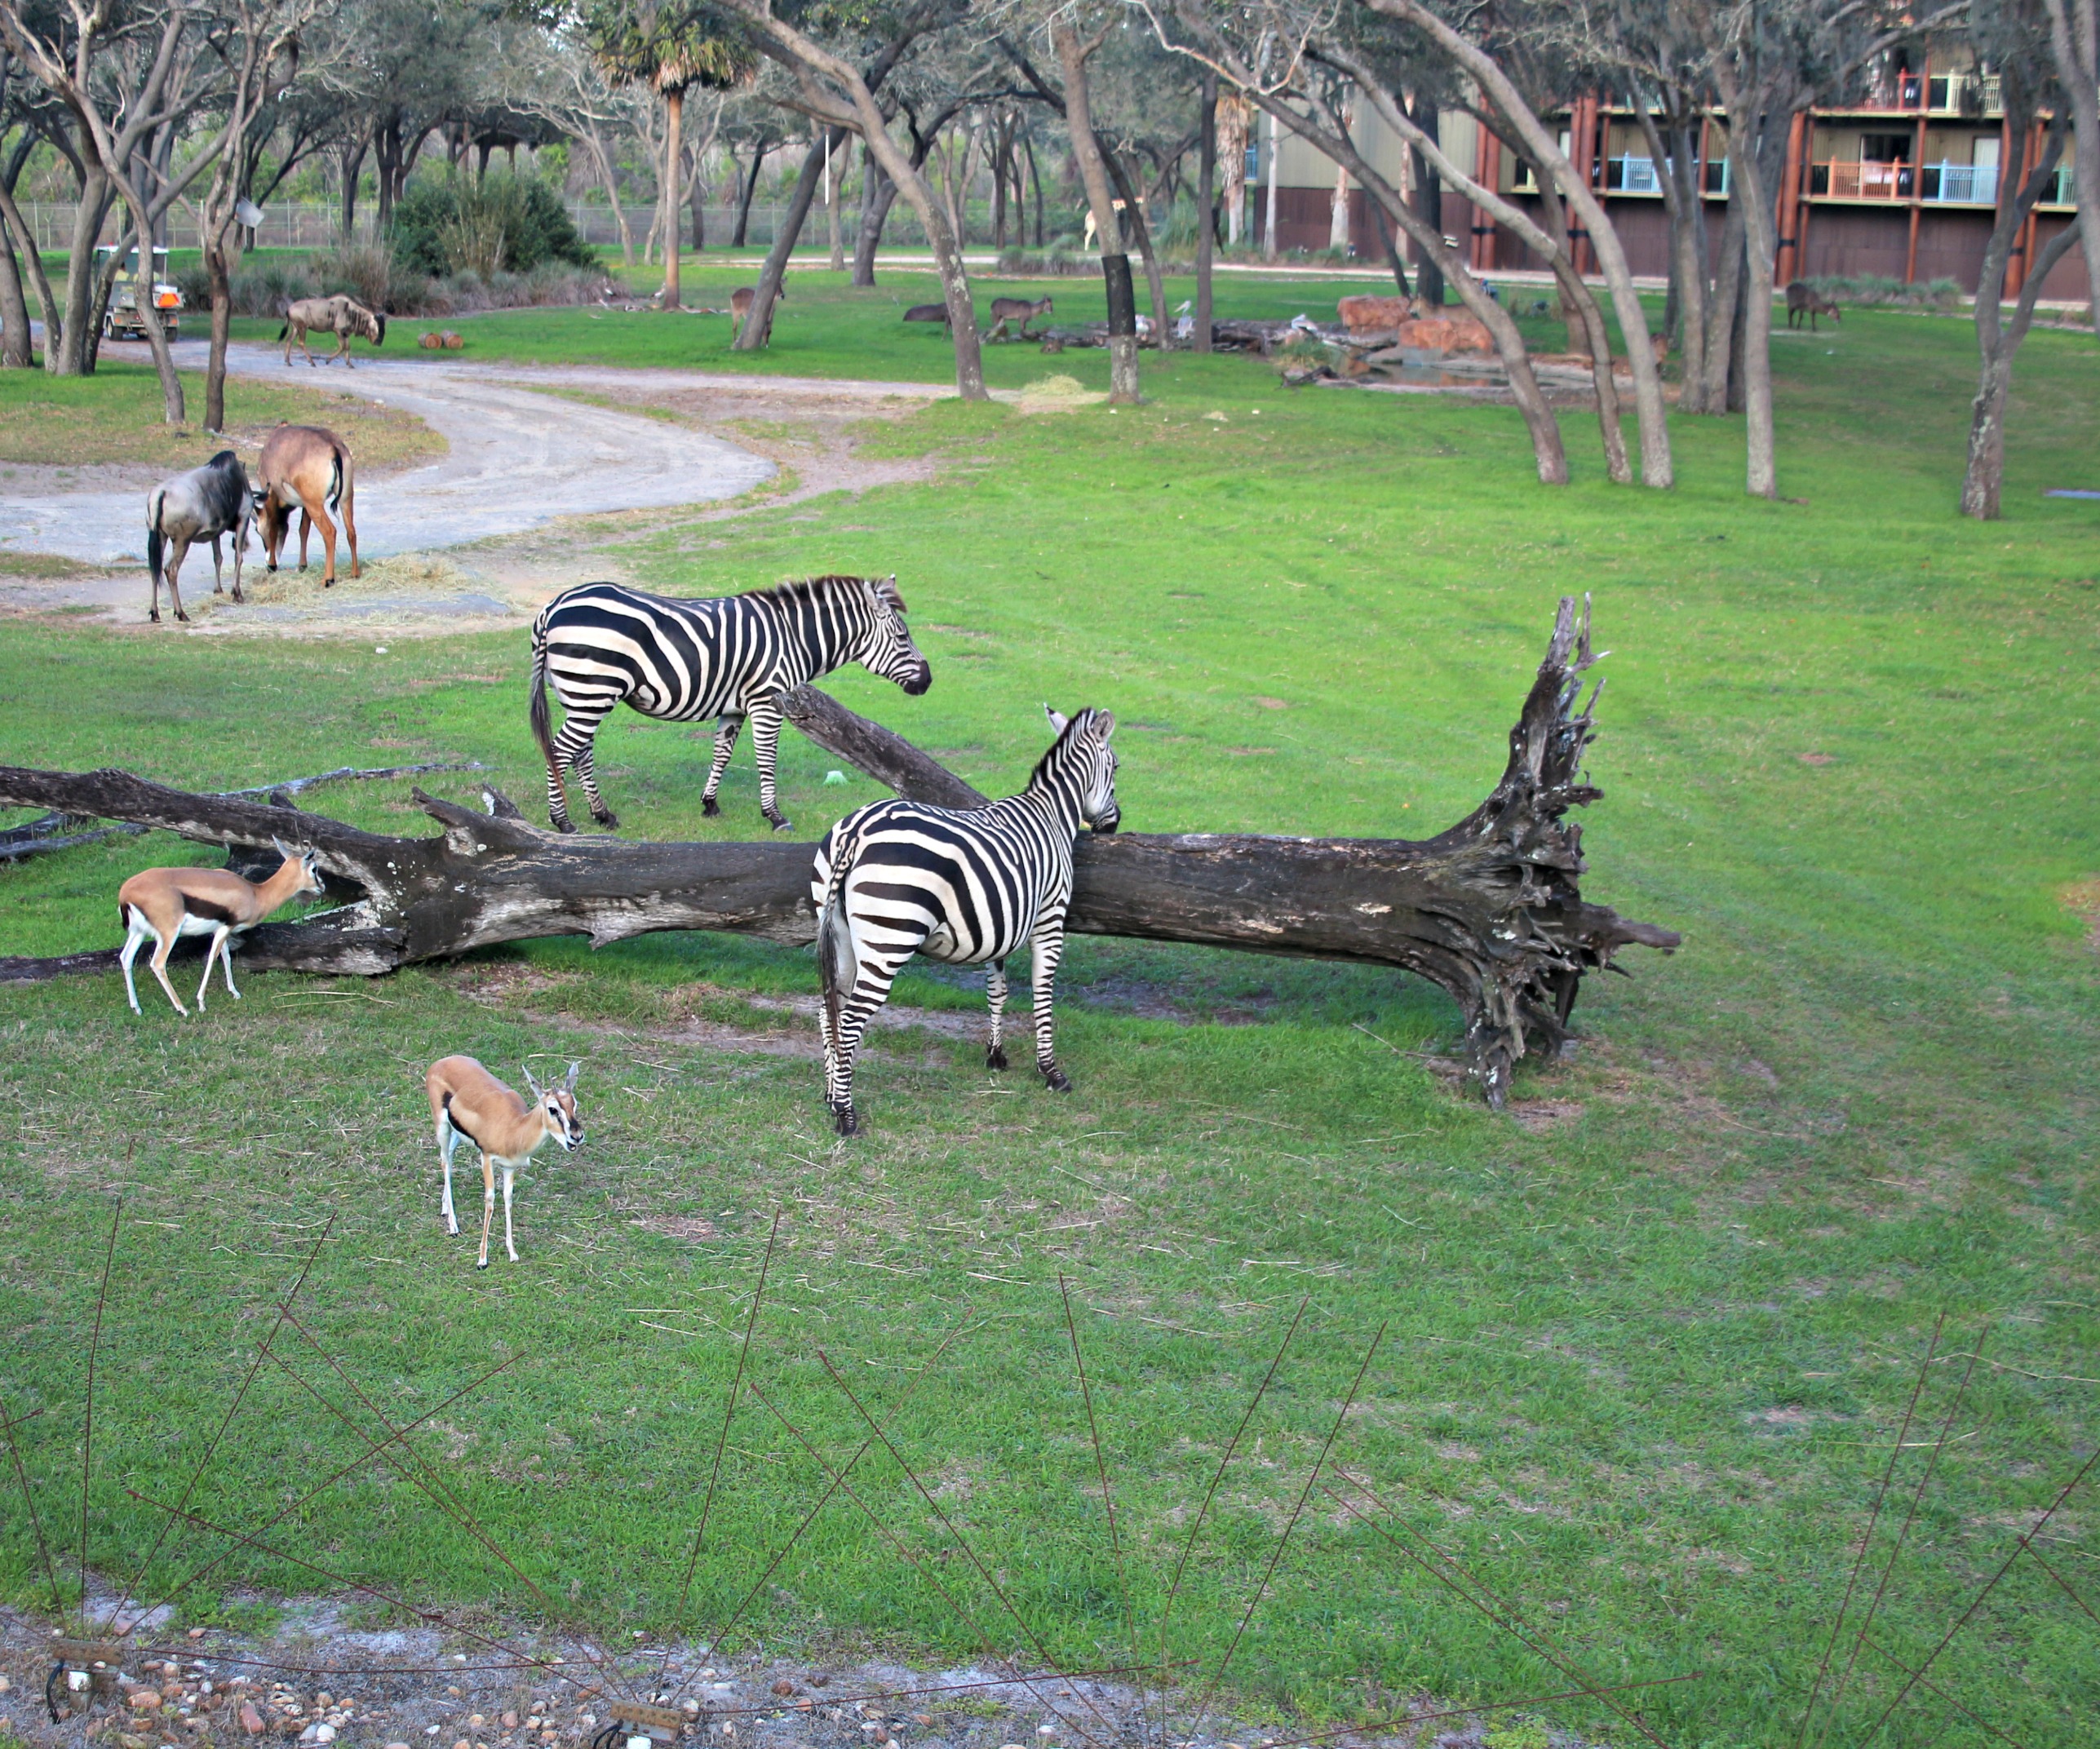 Deluxe Villas at Disney's Animal Kingdom Lodge